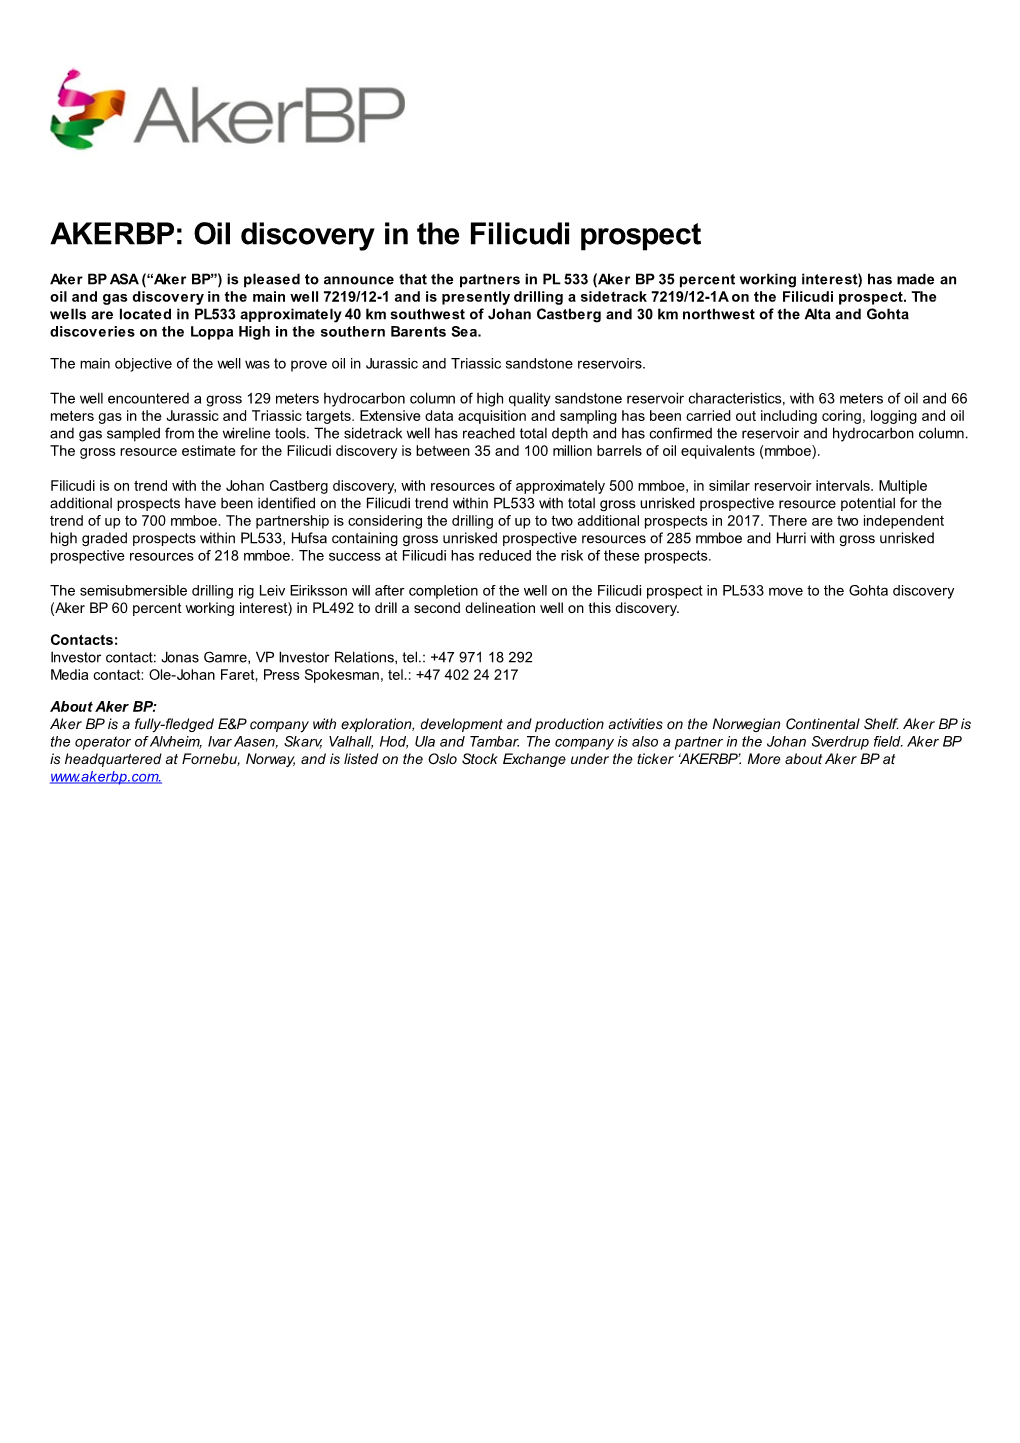 AKERBP: Oil Discovery in the Filicudi Prospect